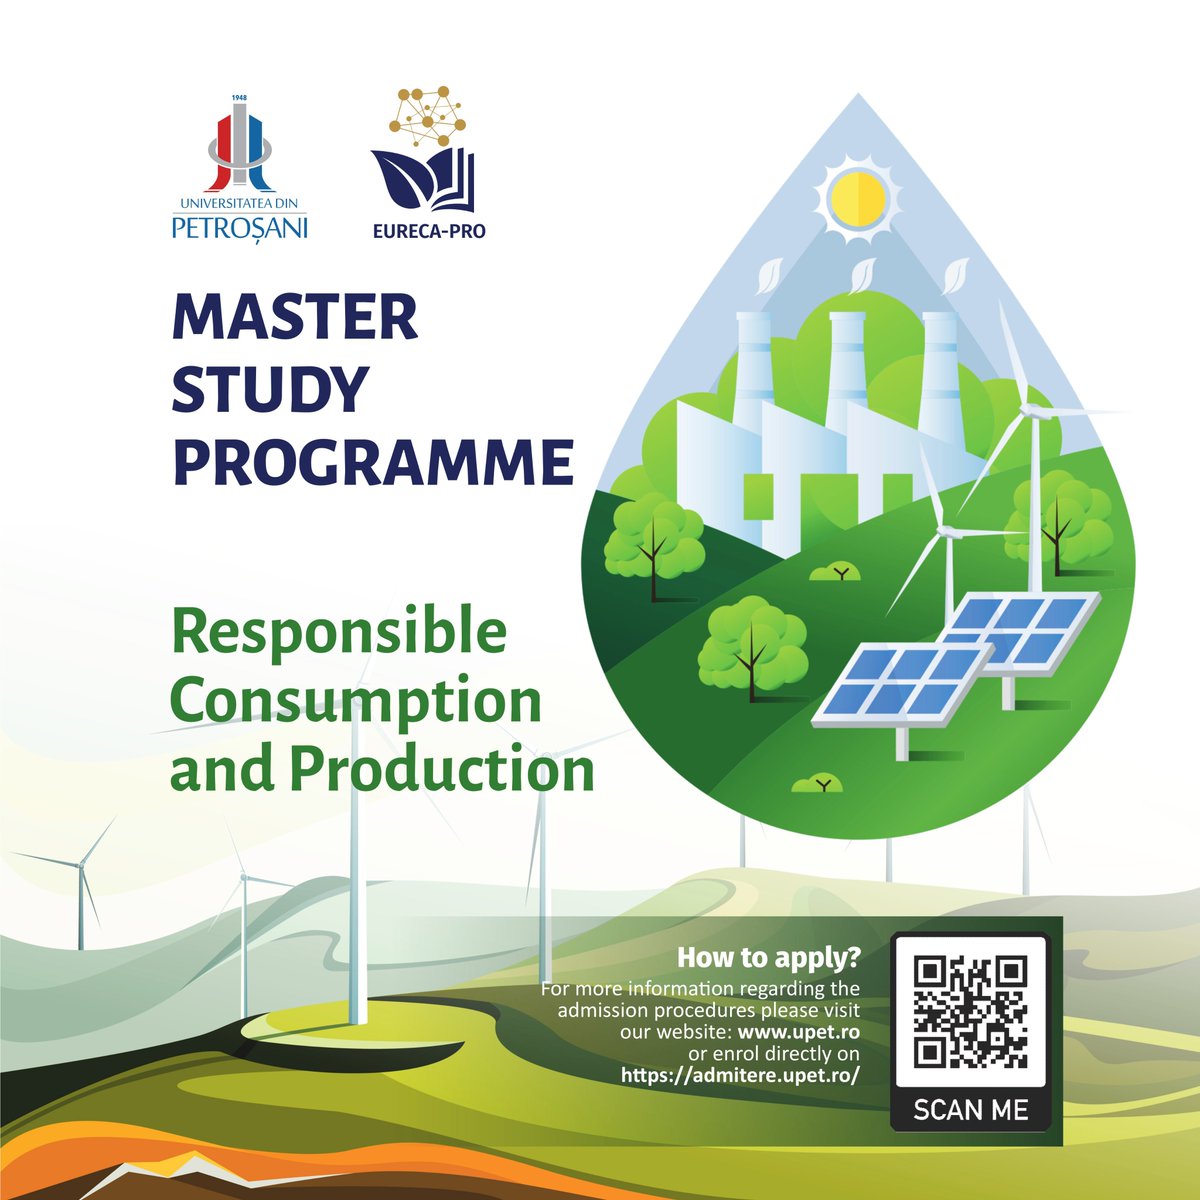 🔵 Master Study Programme 𝗥𝗲𝘀𝗽𝗼𝗻𝘀𝗶𝗯𝗹𝗲 𝗖𝗼𝗻𝘀𝘂𝗺𝗽𝘁𝗶𝗼𝗻 𝗮𝗻𝗱 𝗣𝗿𝗼𝗱𝘂𝗰𝘁𝗶𝗼𝗻
💻Apply online between 𝟯-𝟭𝟰 𝗝𝘂𝗹𝘆 on UPET Admission website:
admitere.upet.ro

#Admitere #UPet #master #EurecaPro #responsibleproduction #responsibleconsumption